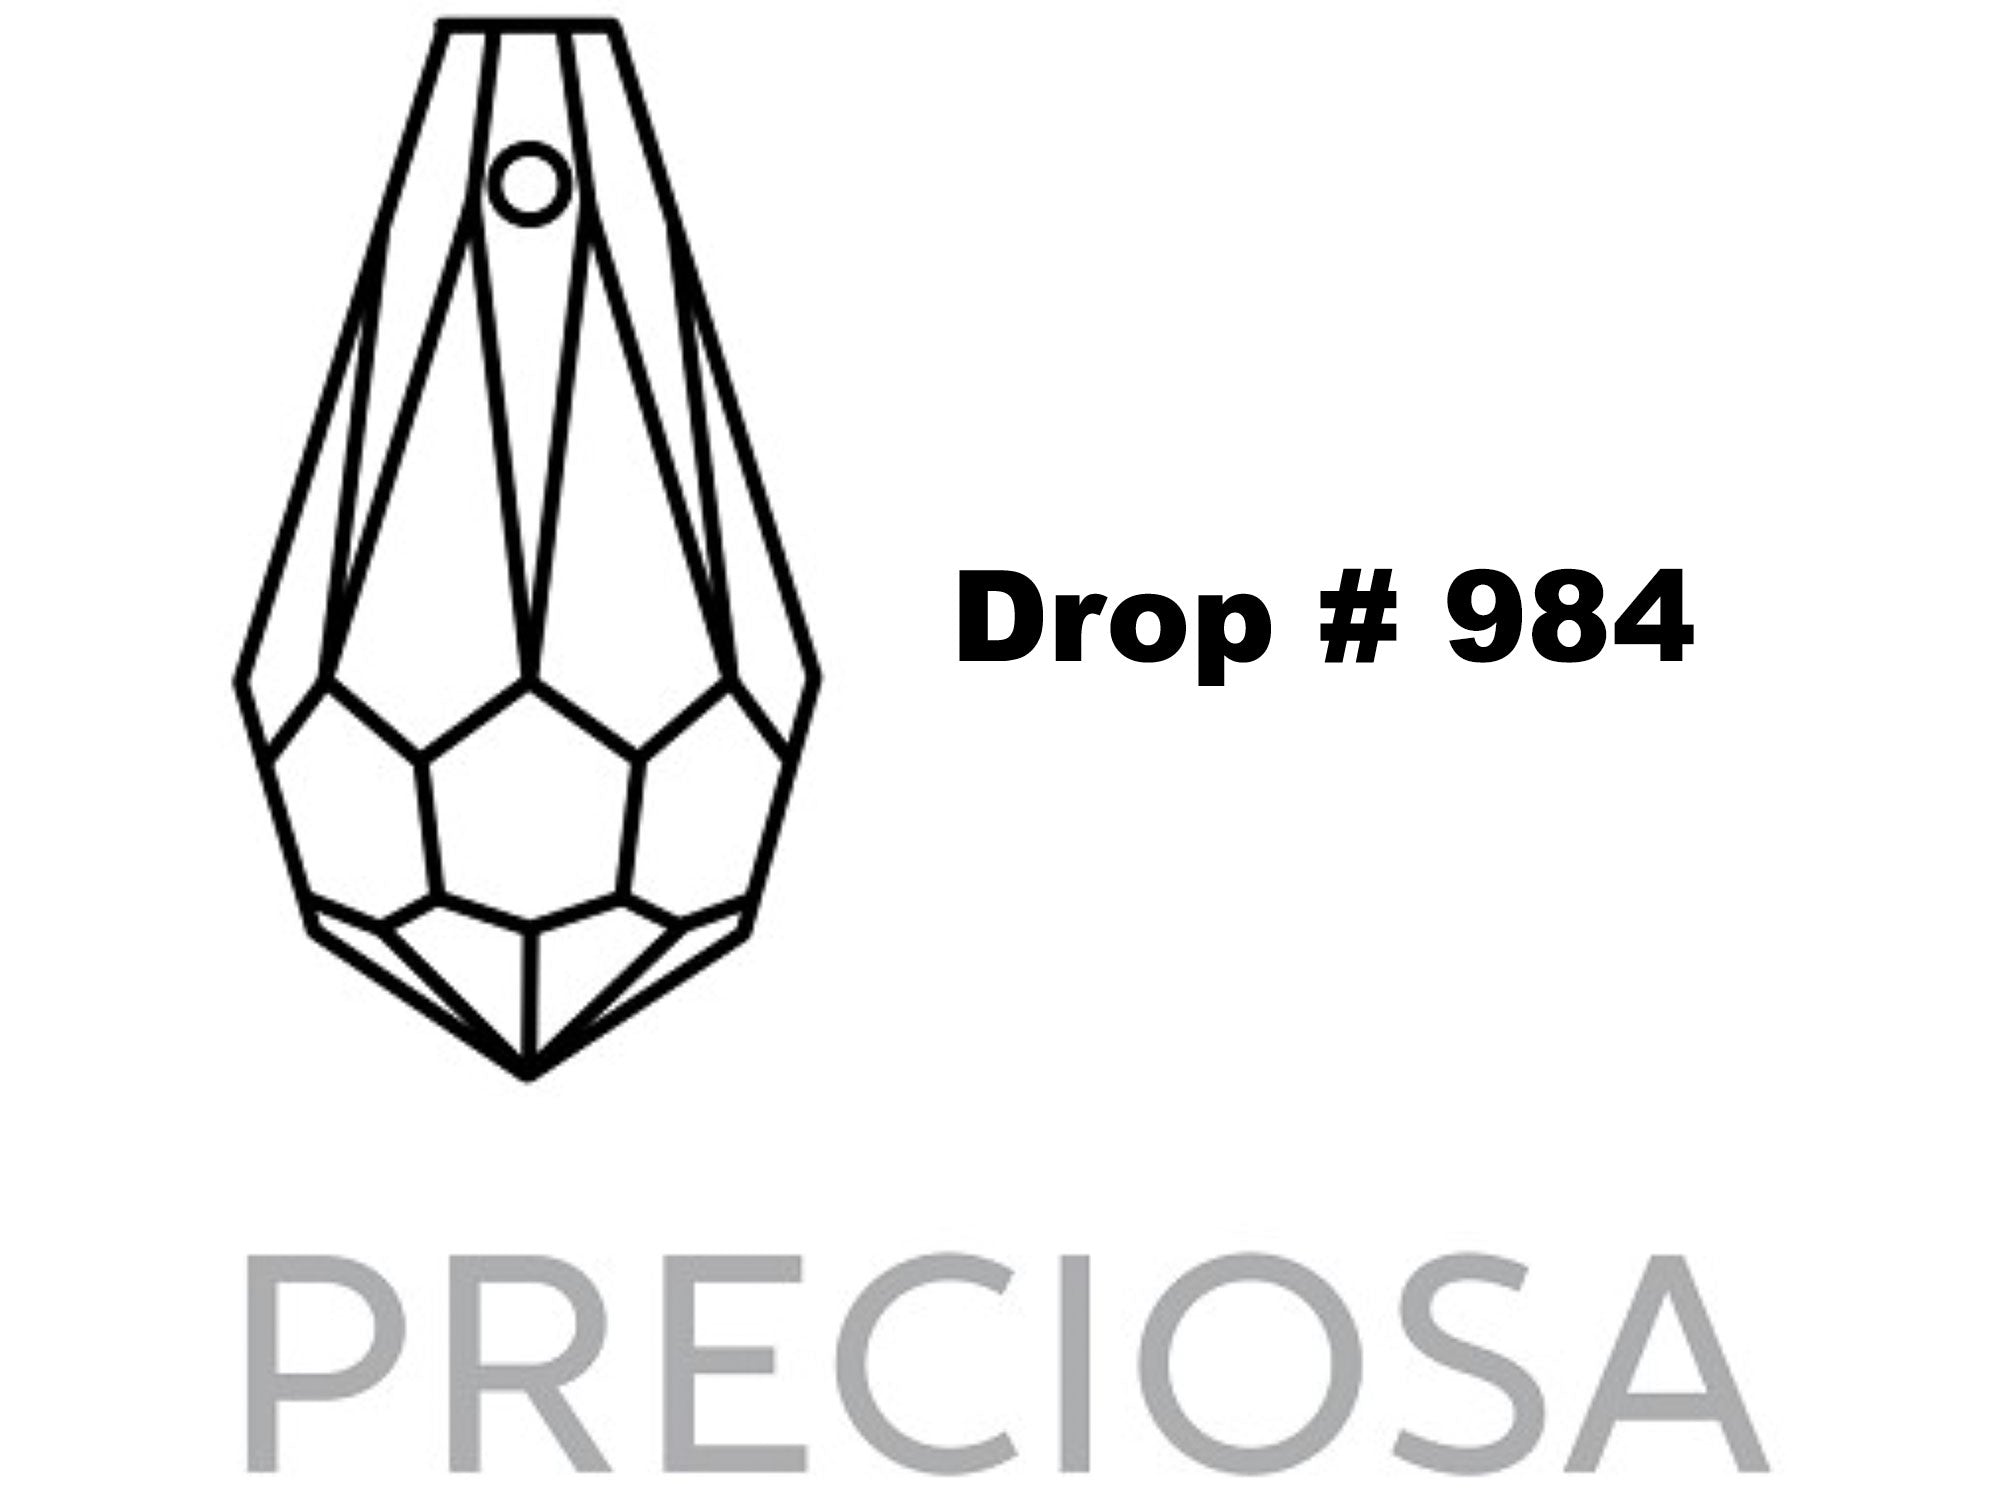 Crystal AB, Preciosa Genuine Czech Crystals, Drop #984 Pendants 6.5x13mm Crystal AB (top drilled), 24pcs, P907